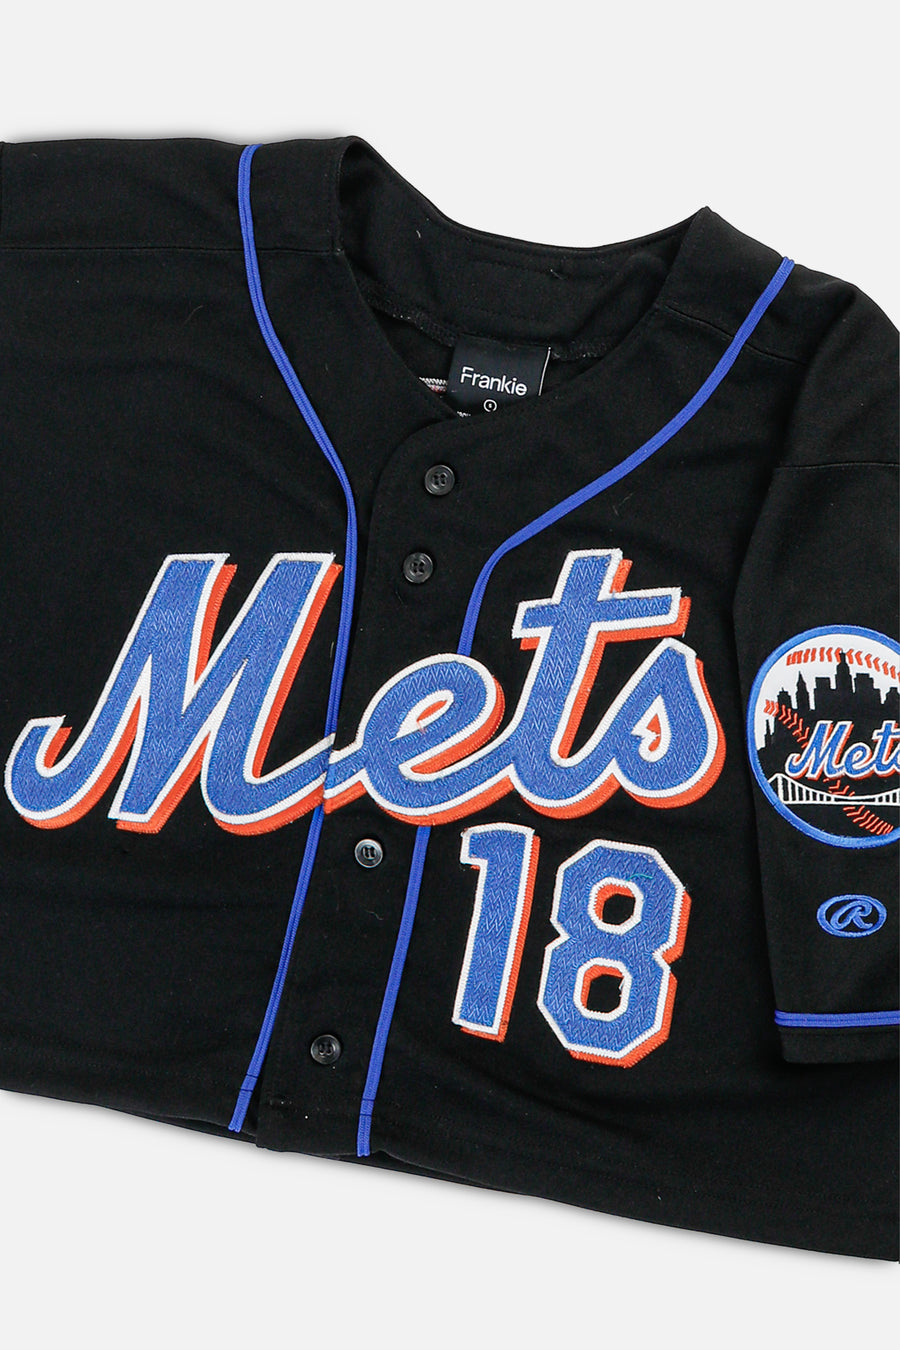 Rework Crop NY Mets MLB Jersey - S